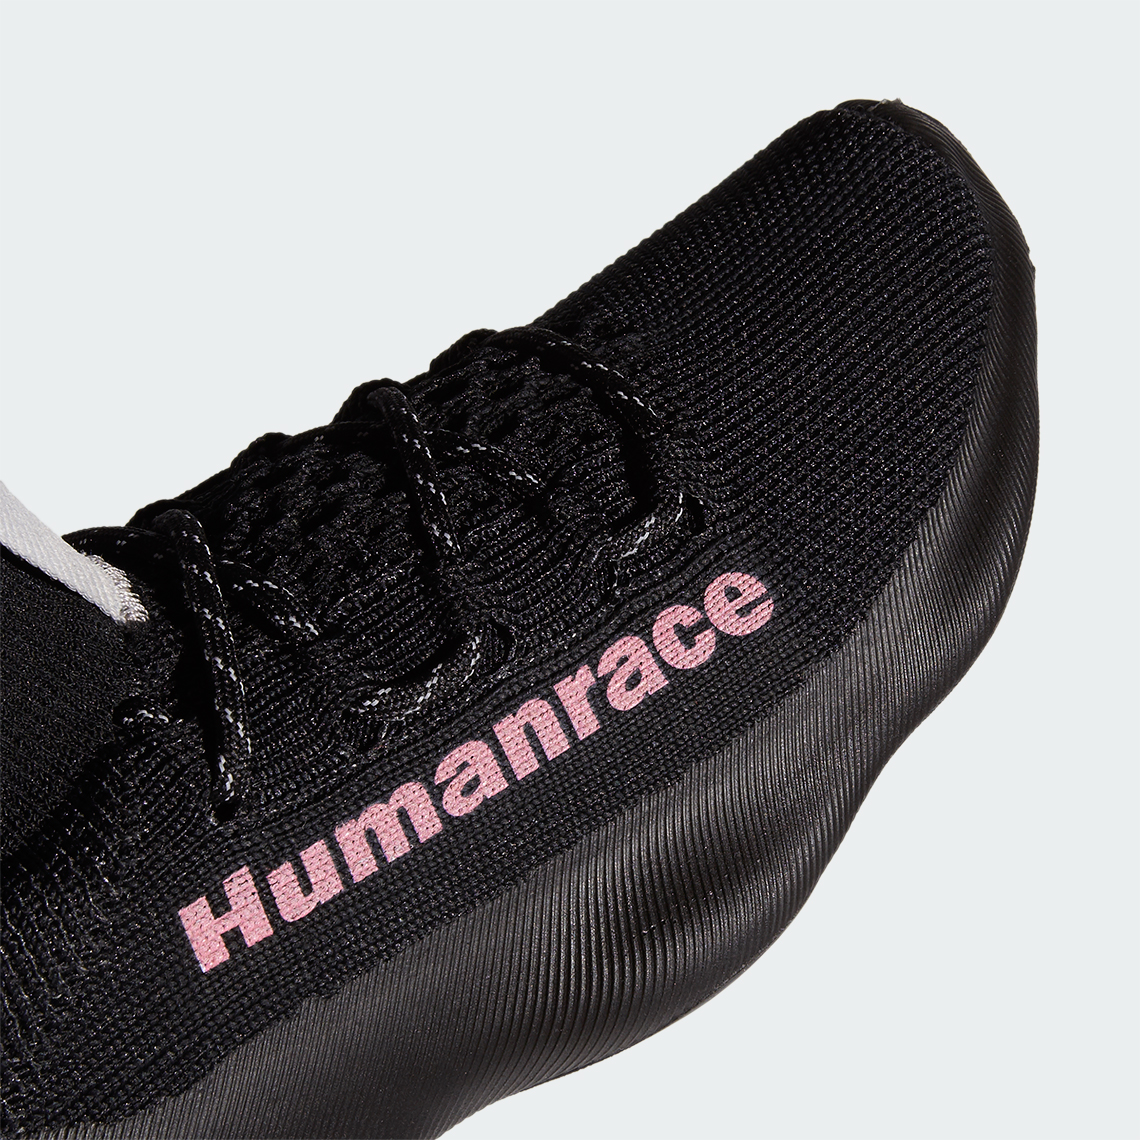 Pharrell Adidas Human Race Sichona Black Pink Gx3032 Release Date 2